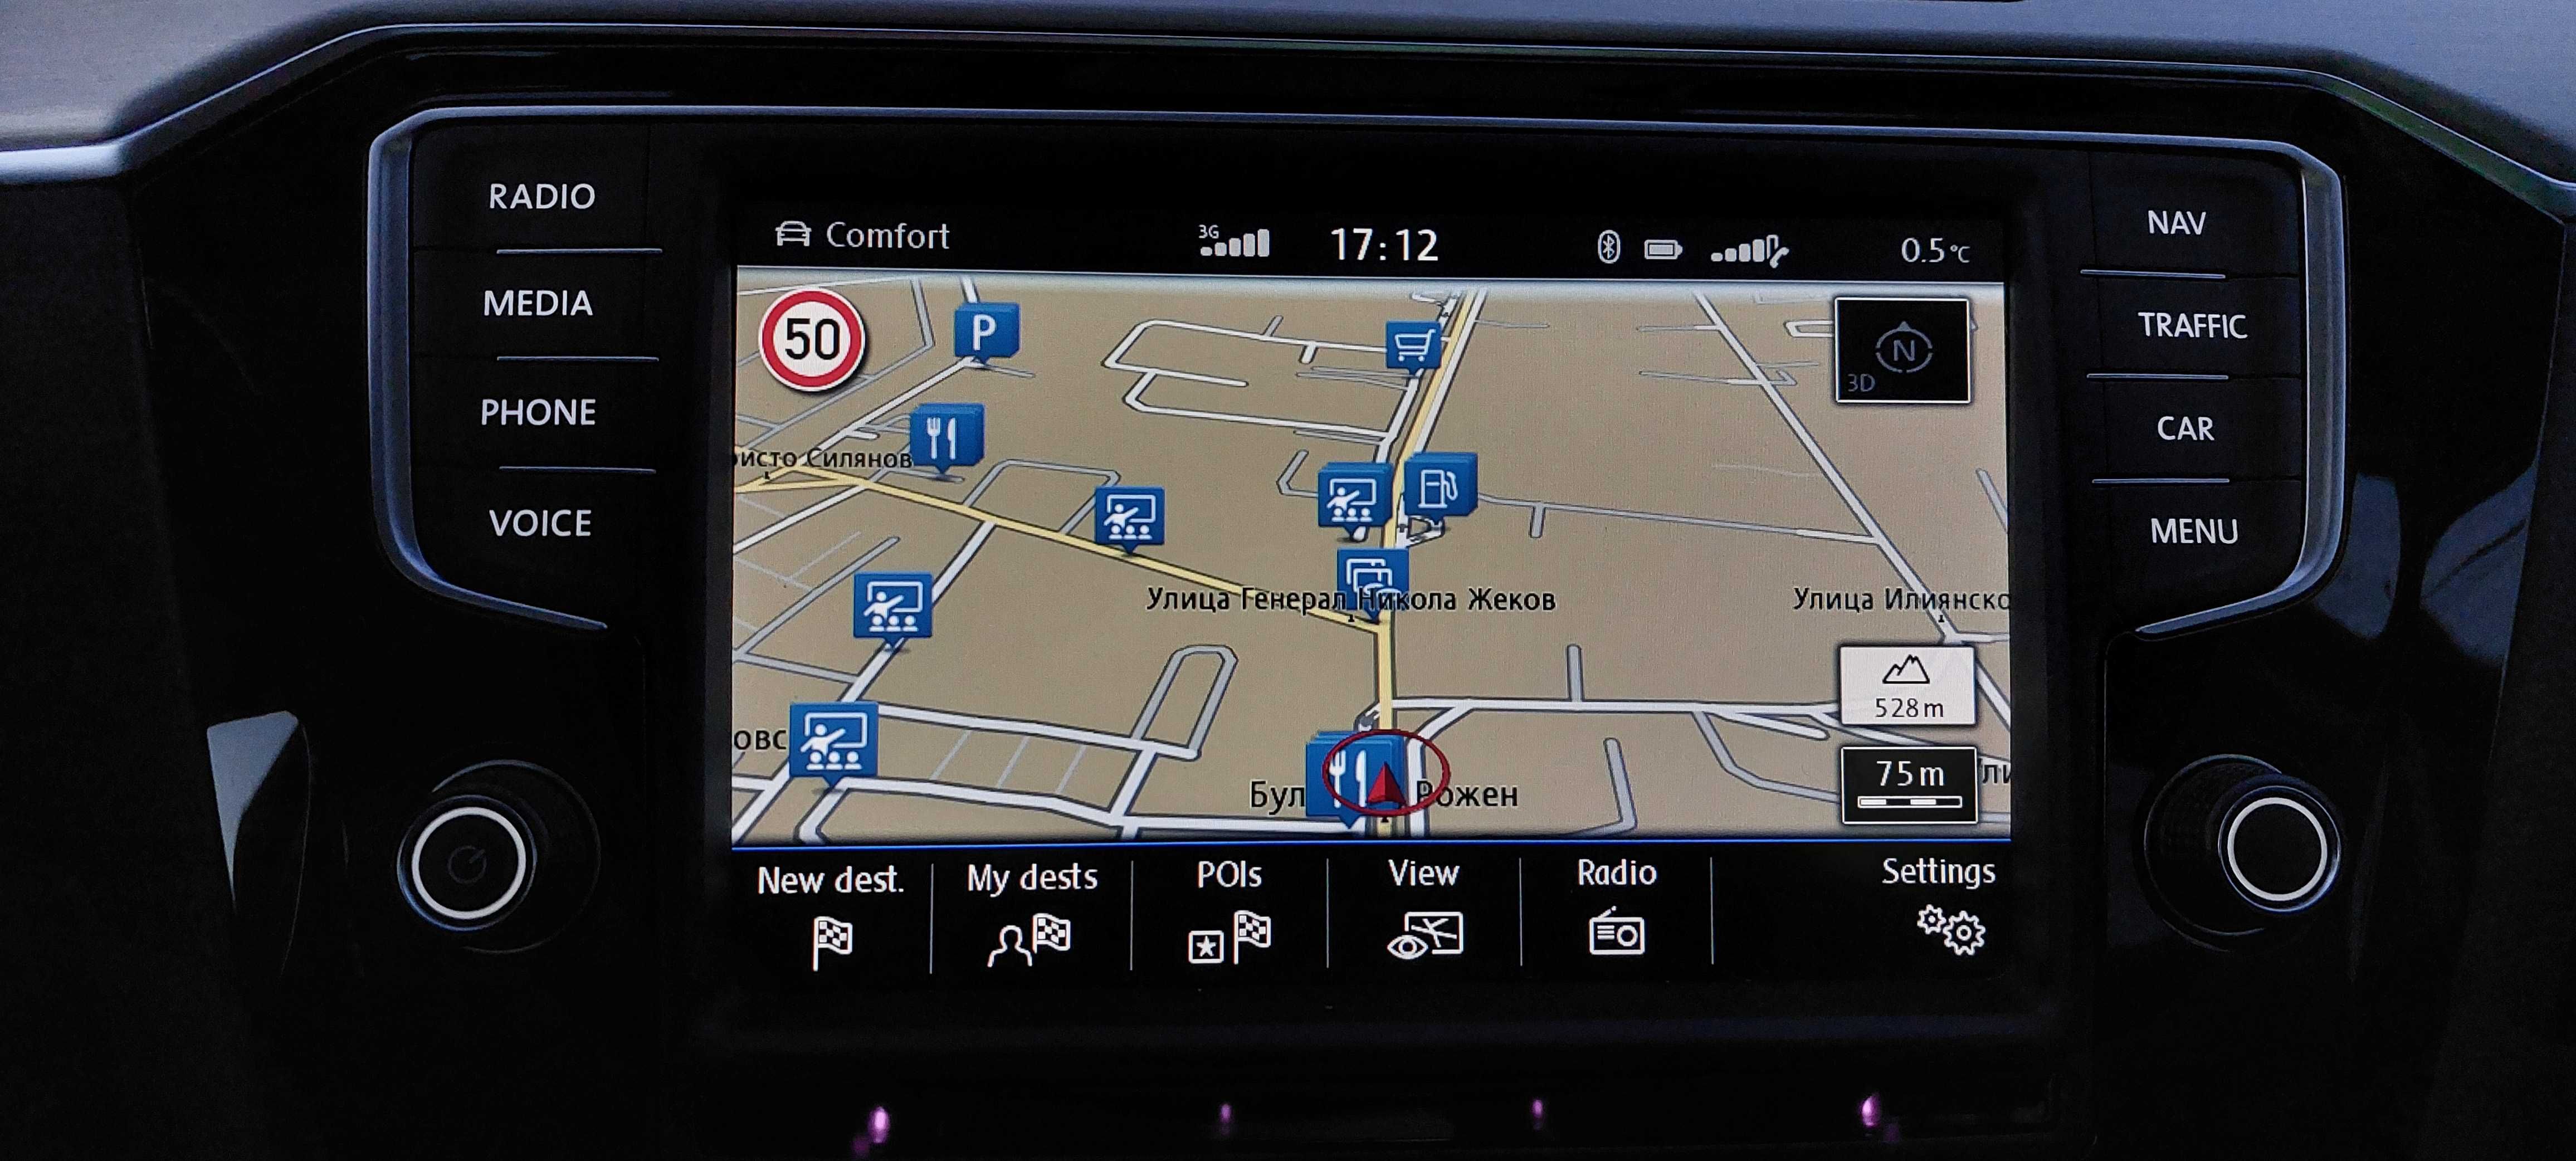 2023/2024 Навигационни карти за VW Discover Media Pro MIB1, MIB2